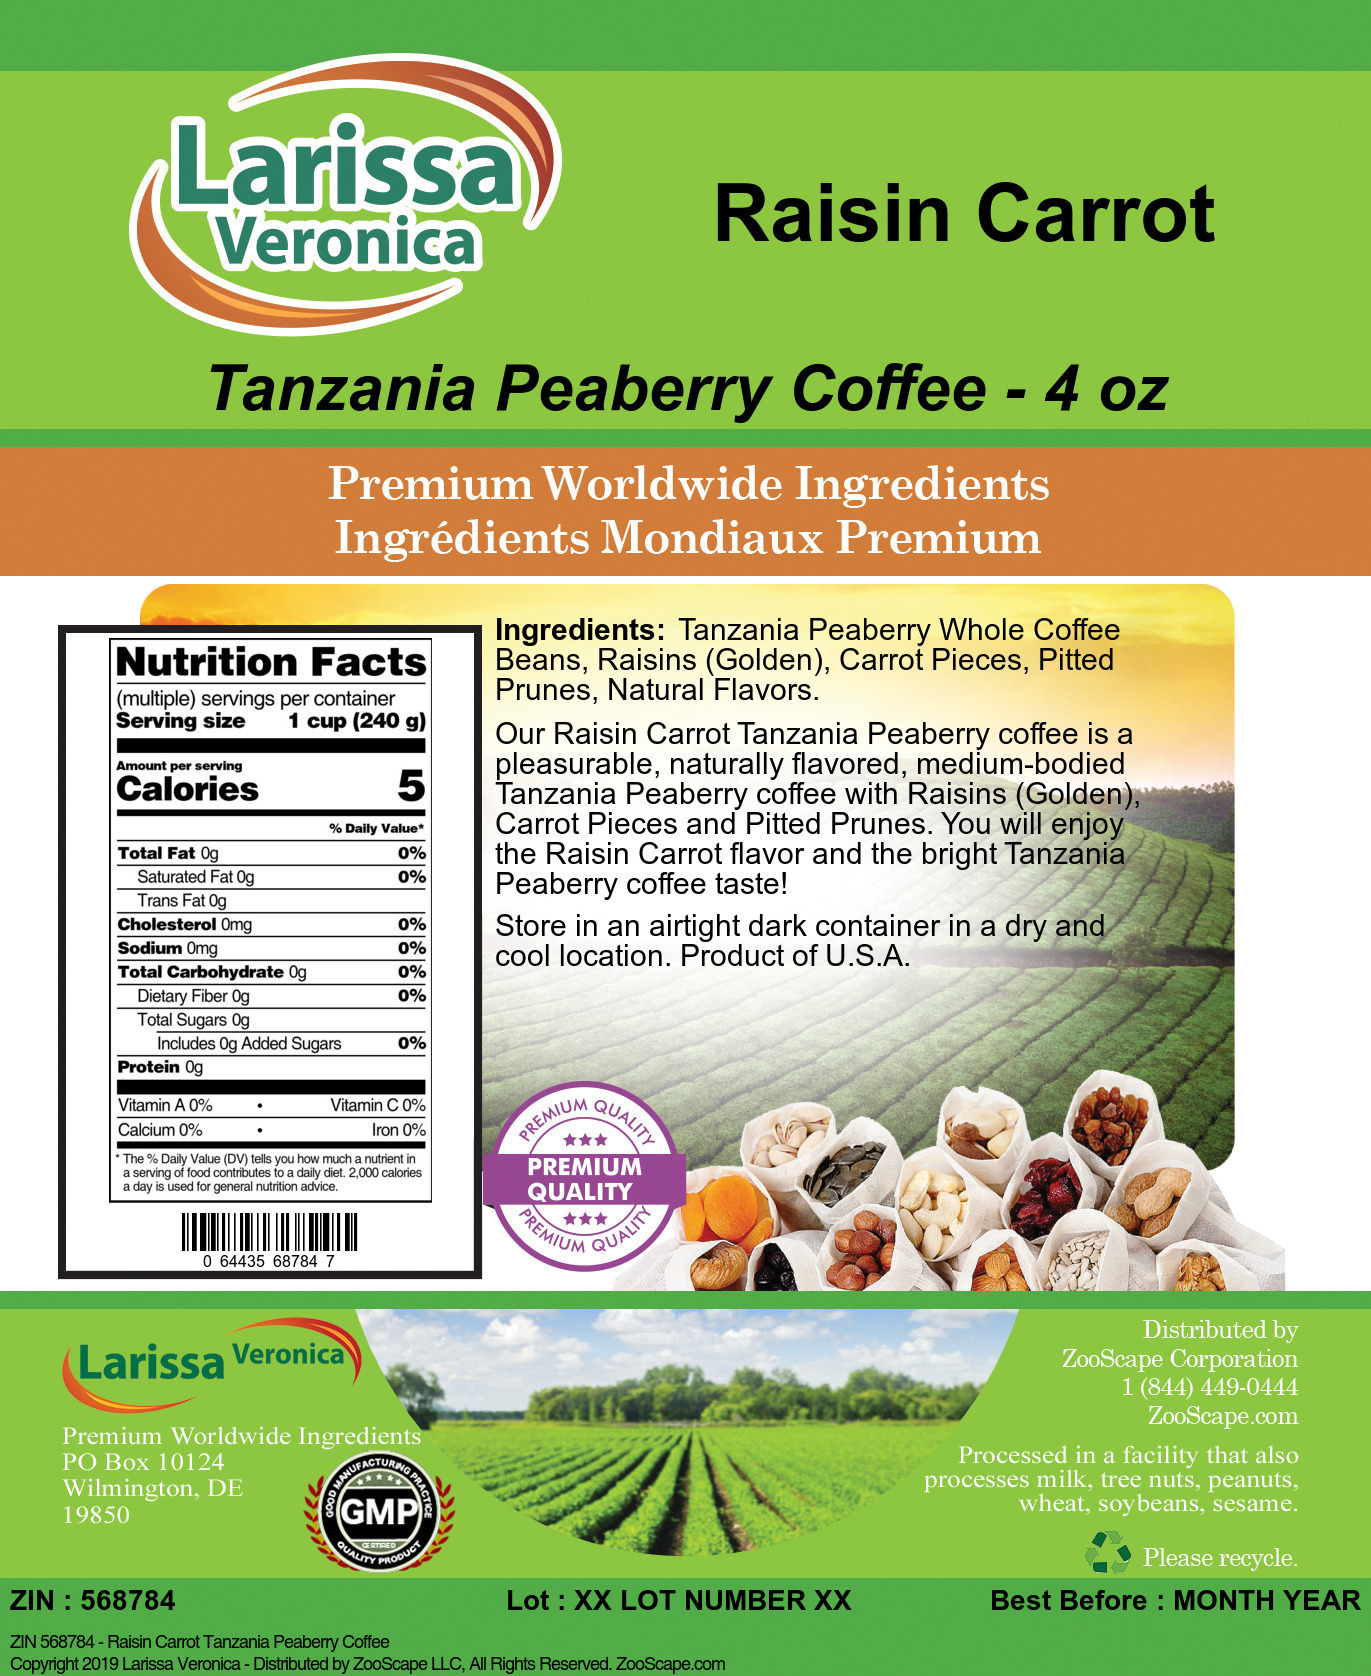 Raisin Carrot Tanzania Peaberry Coffee - Label